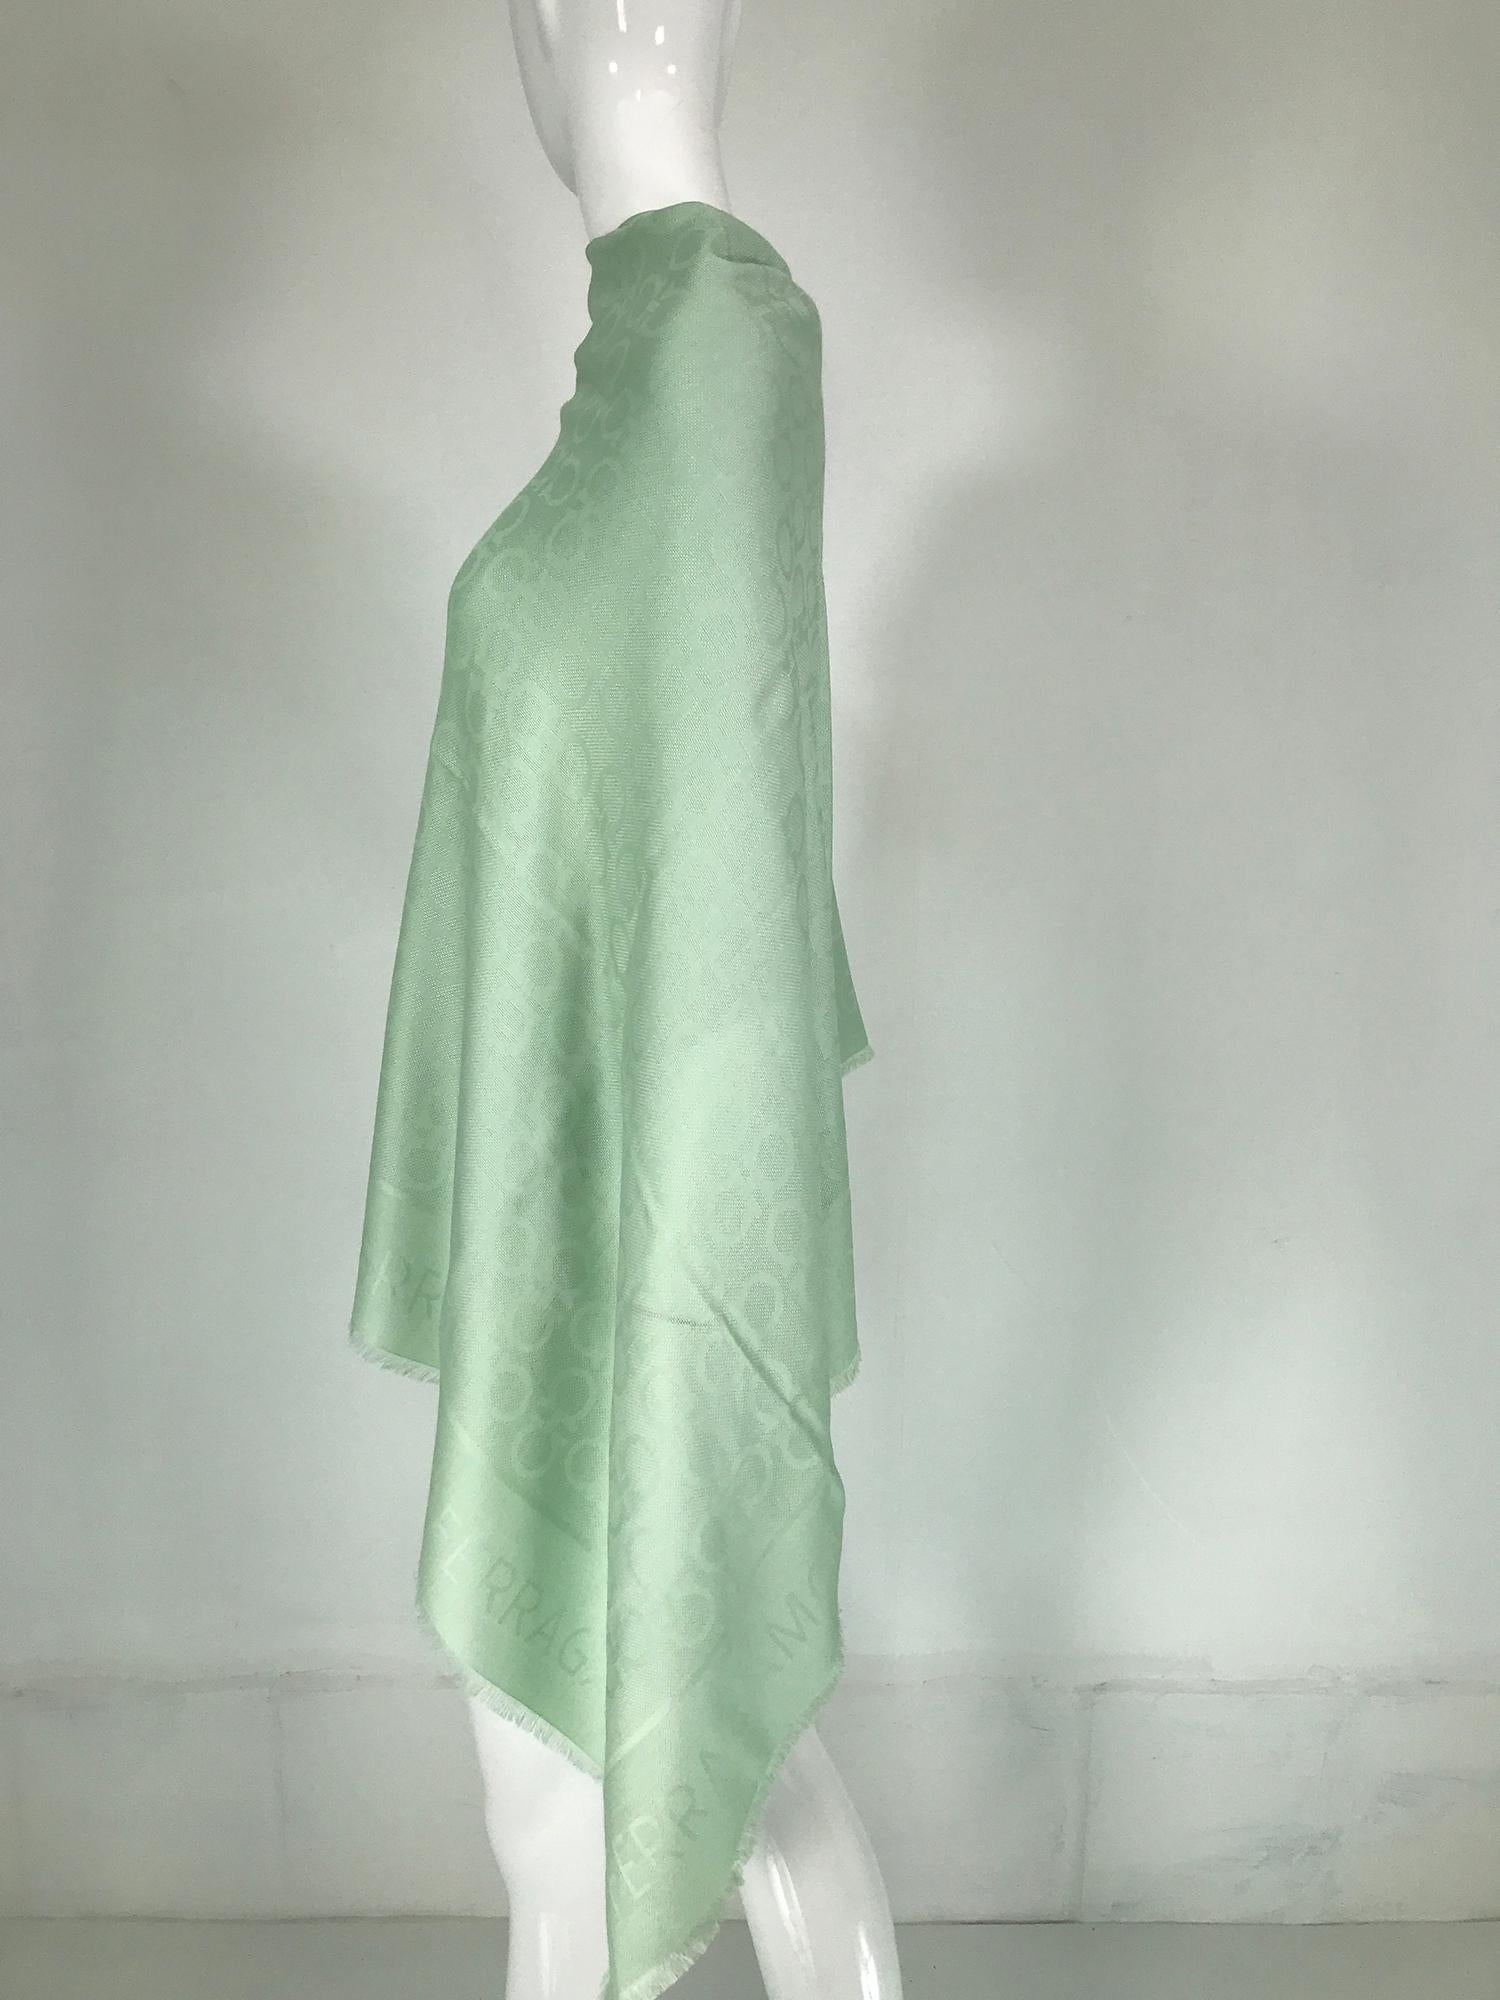 Salvatore Ferragamo Mint Green Silk & Wool Jacquard Shawl With Self Fringe For Sale 5